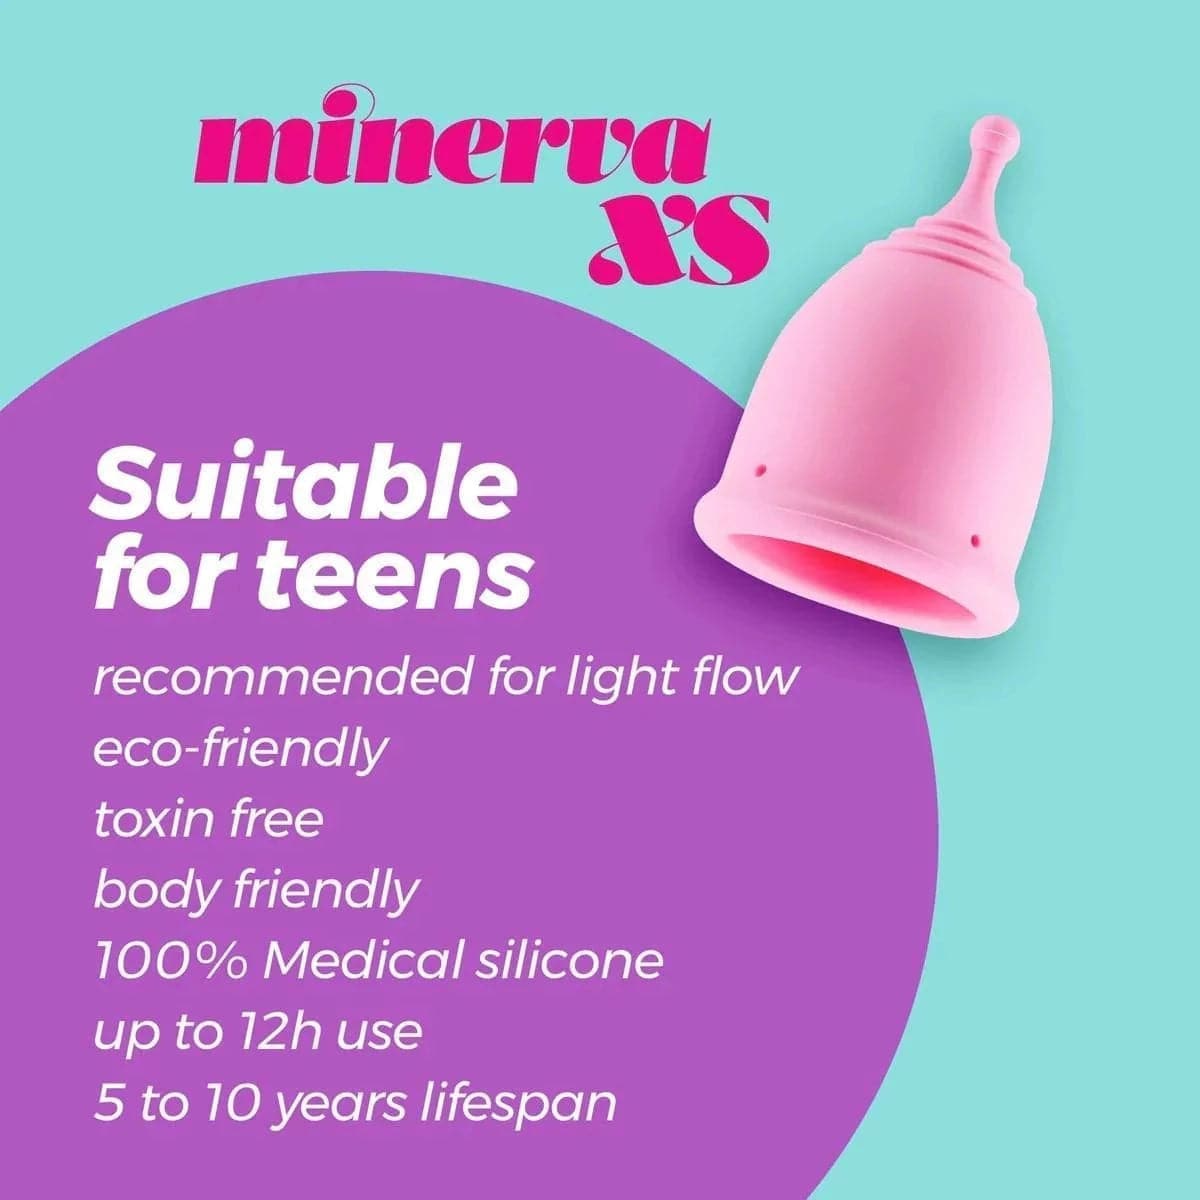 Copo Menstrual Minerva XS 100% Silicone, 18ml, 5.5cm Ø3.8cm  Crushious   